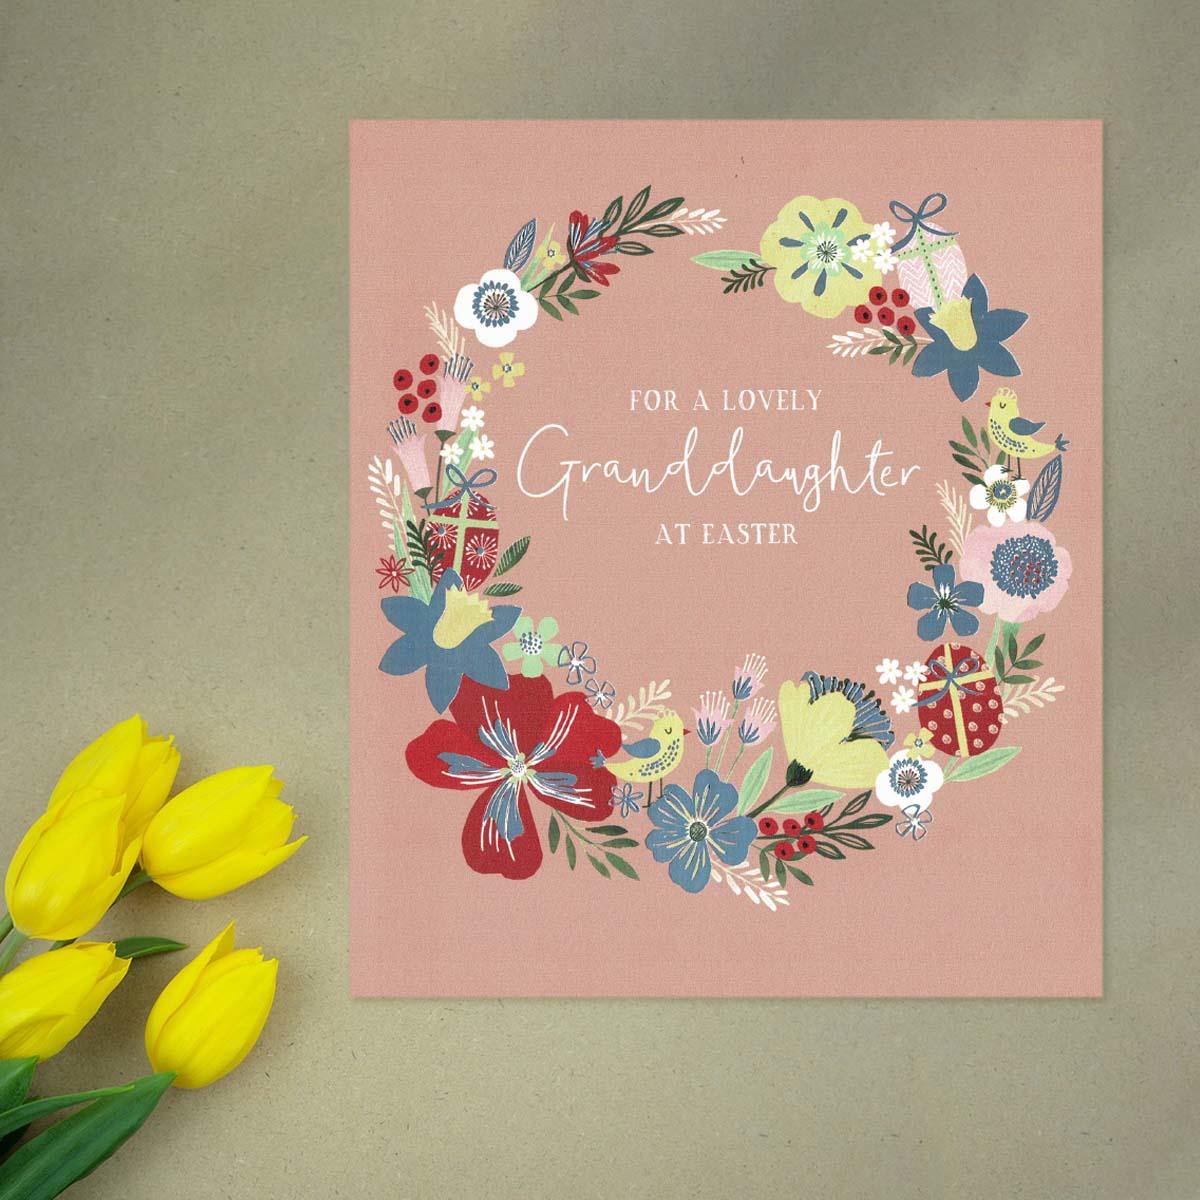 Lovely Granddaughter Easter Card Front Image